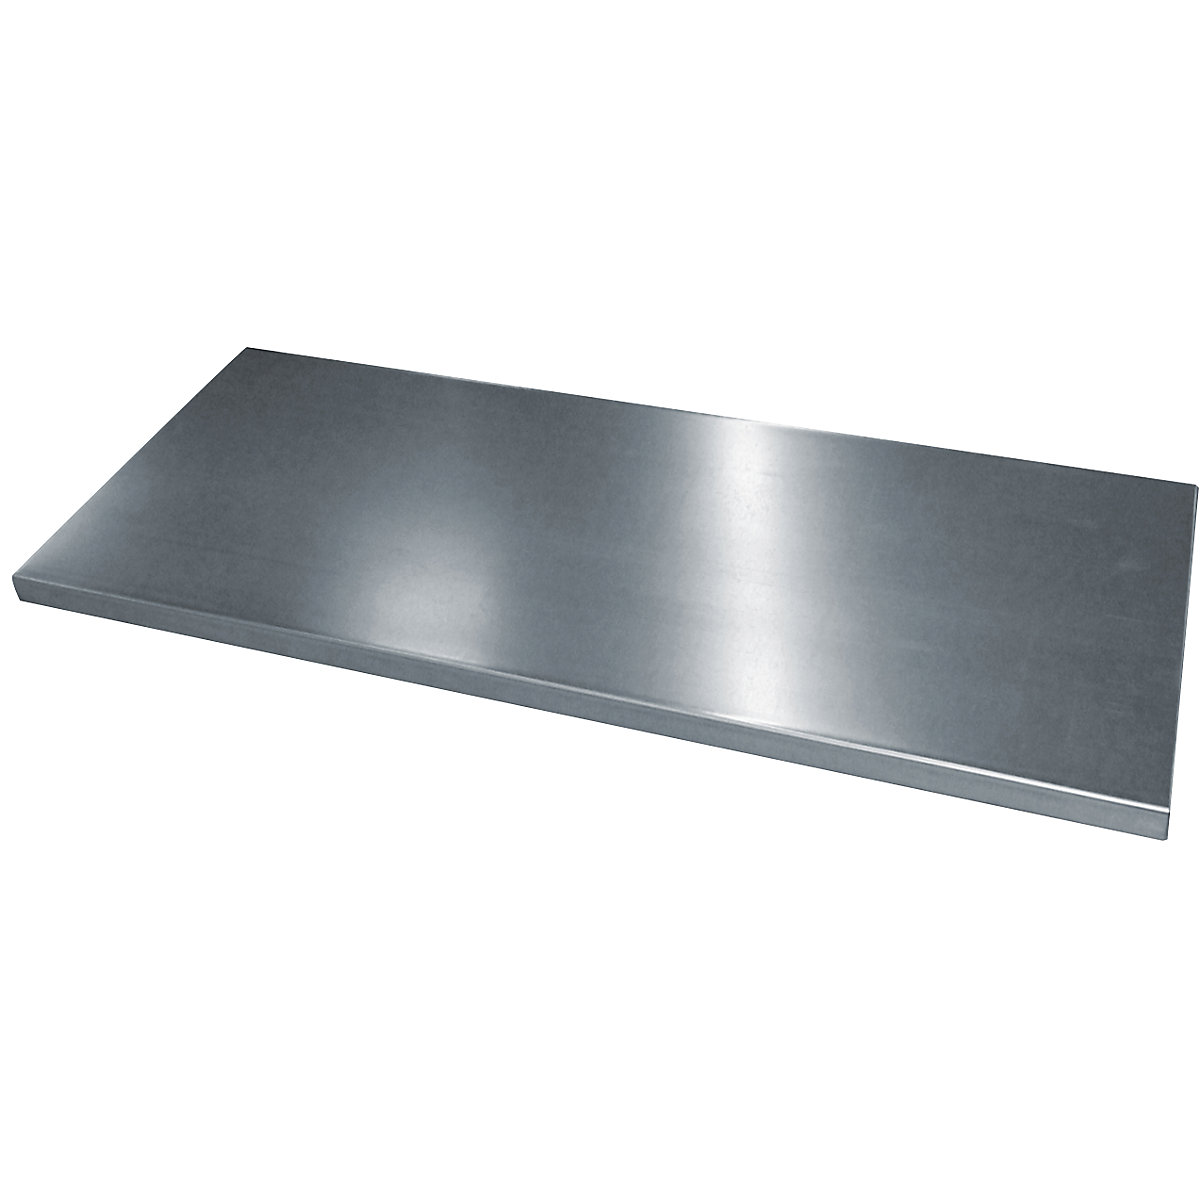 Shelf – C+P, width 700 mm, depth 400 mm